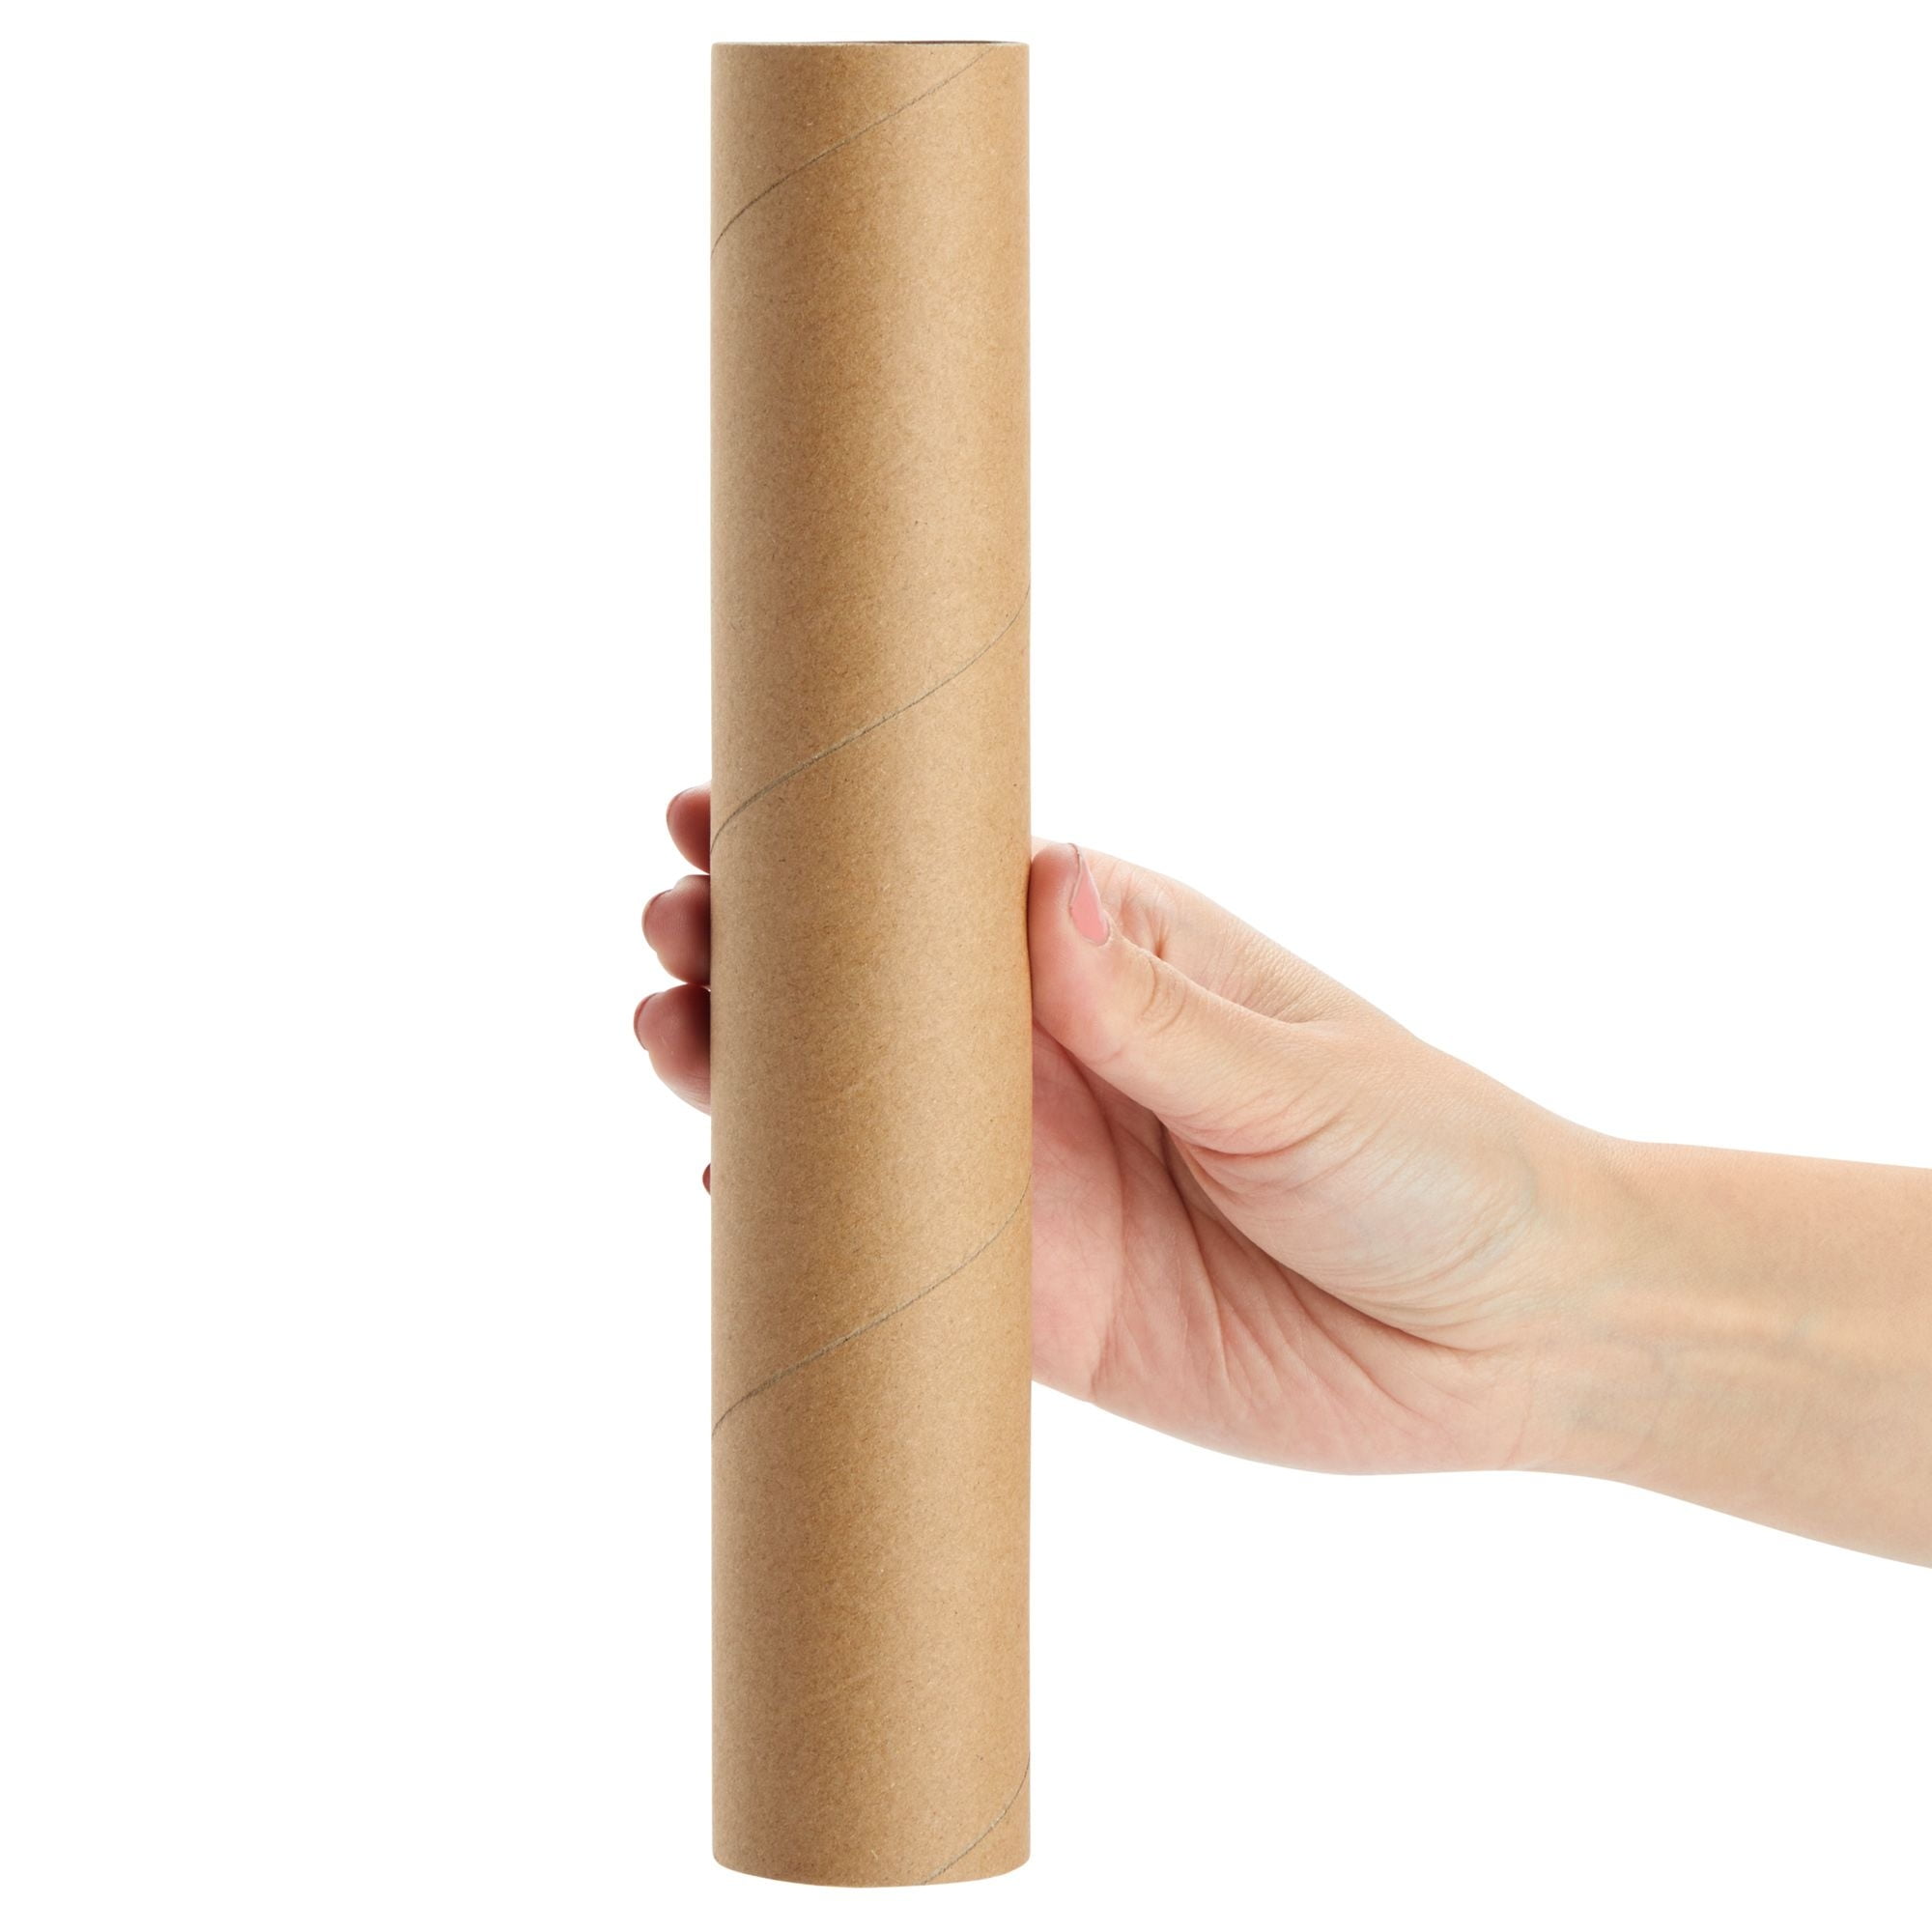 Henoyso 108 Pcs Brown Cardboard Tubes for Crafts 1.8 x 10 Inch Bulk Craft  Cardboard Tube Paper Towel Rolls Thick Paper Rolls Empty Craft Tubes for  Art